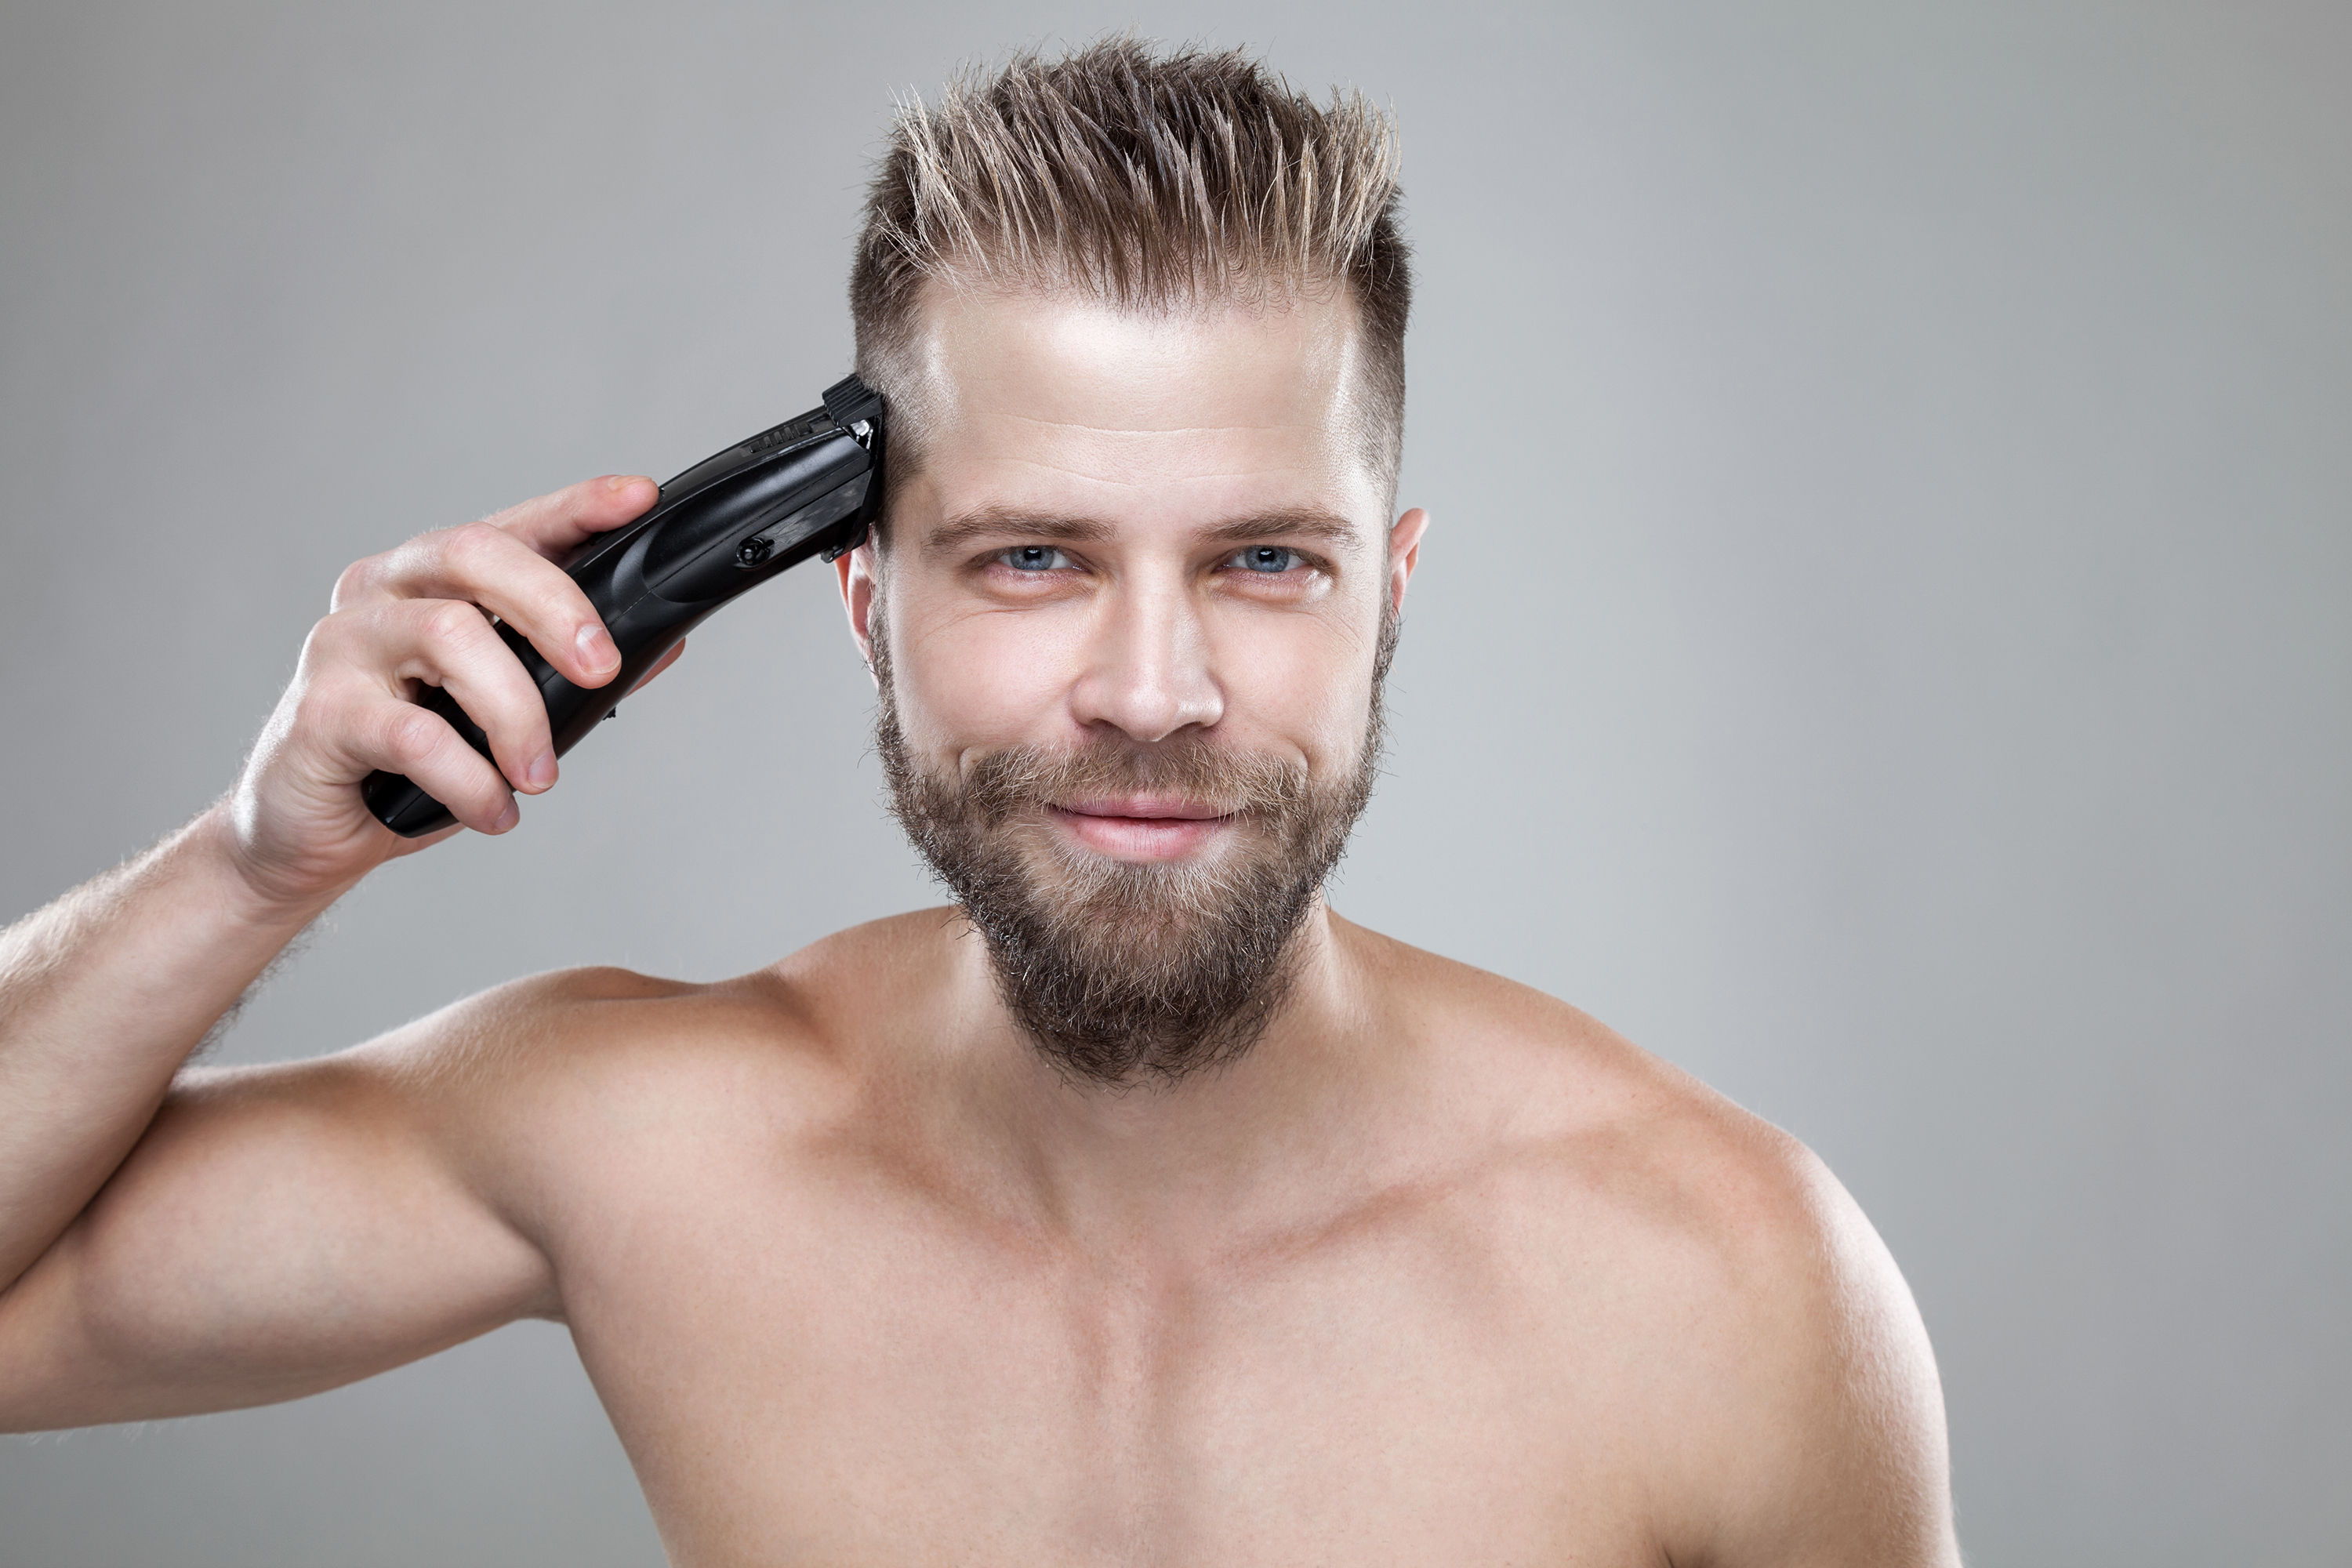 3114 Women Cutting Mens Hair Images Stock Photos  Vectors  Shutterstock